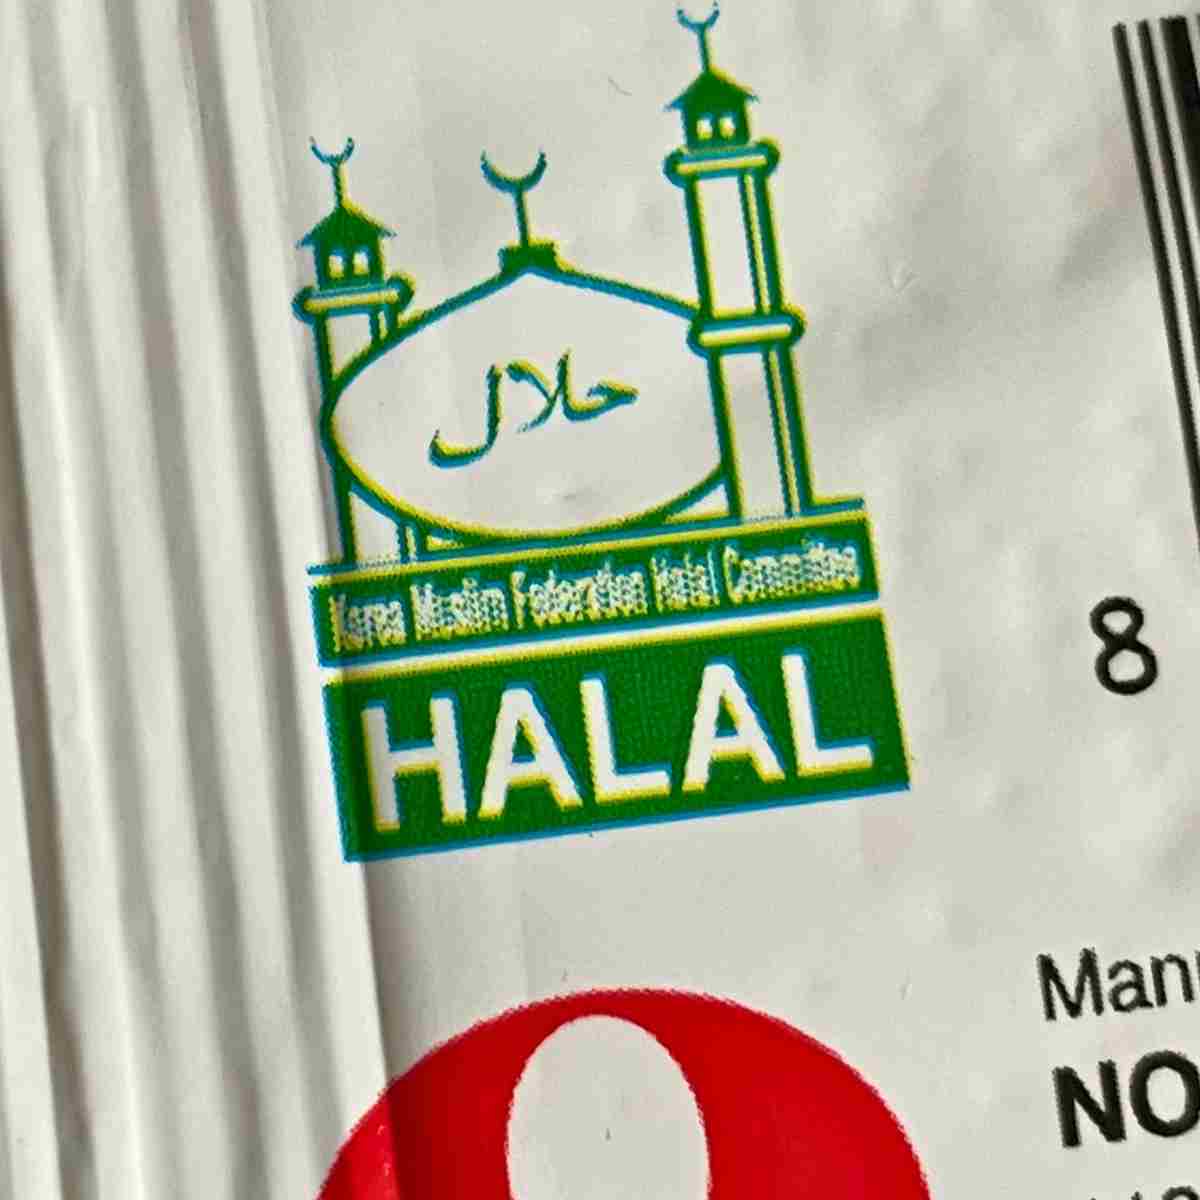 halal certification sign on Korean ramen